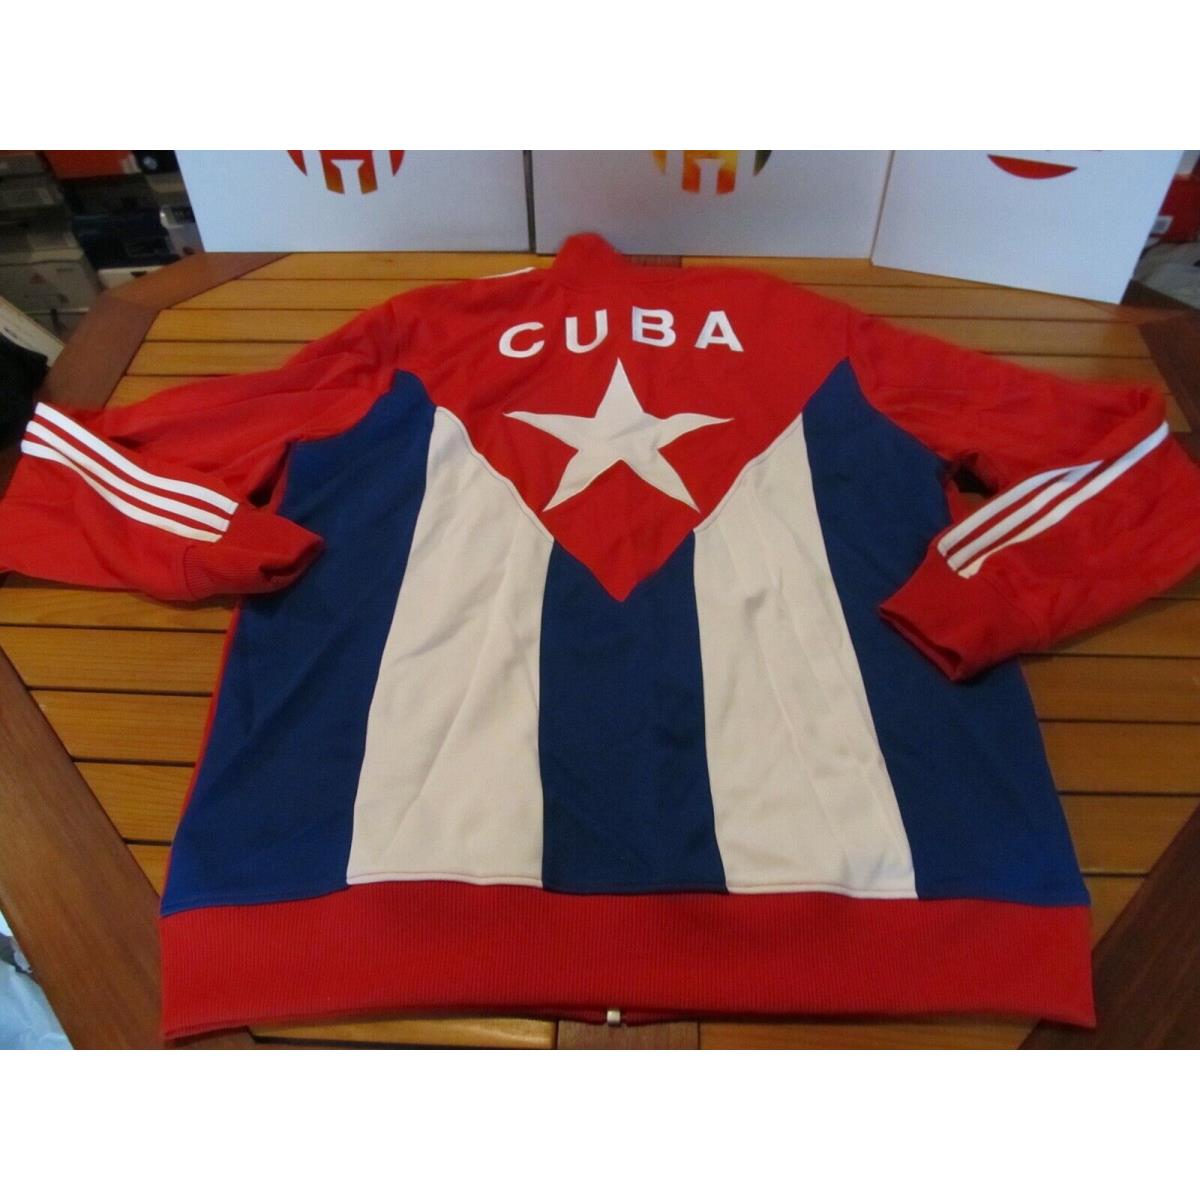 Adidas Originals Cuba TT Track Jacket Trefoil Red Blue XL 232235 Soccer | 692740378053 Adidas Cuba - Red SporTipTop